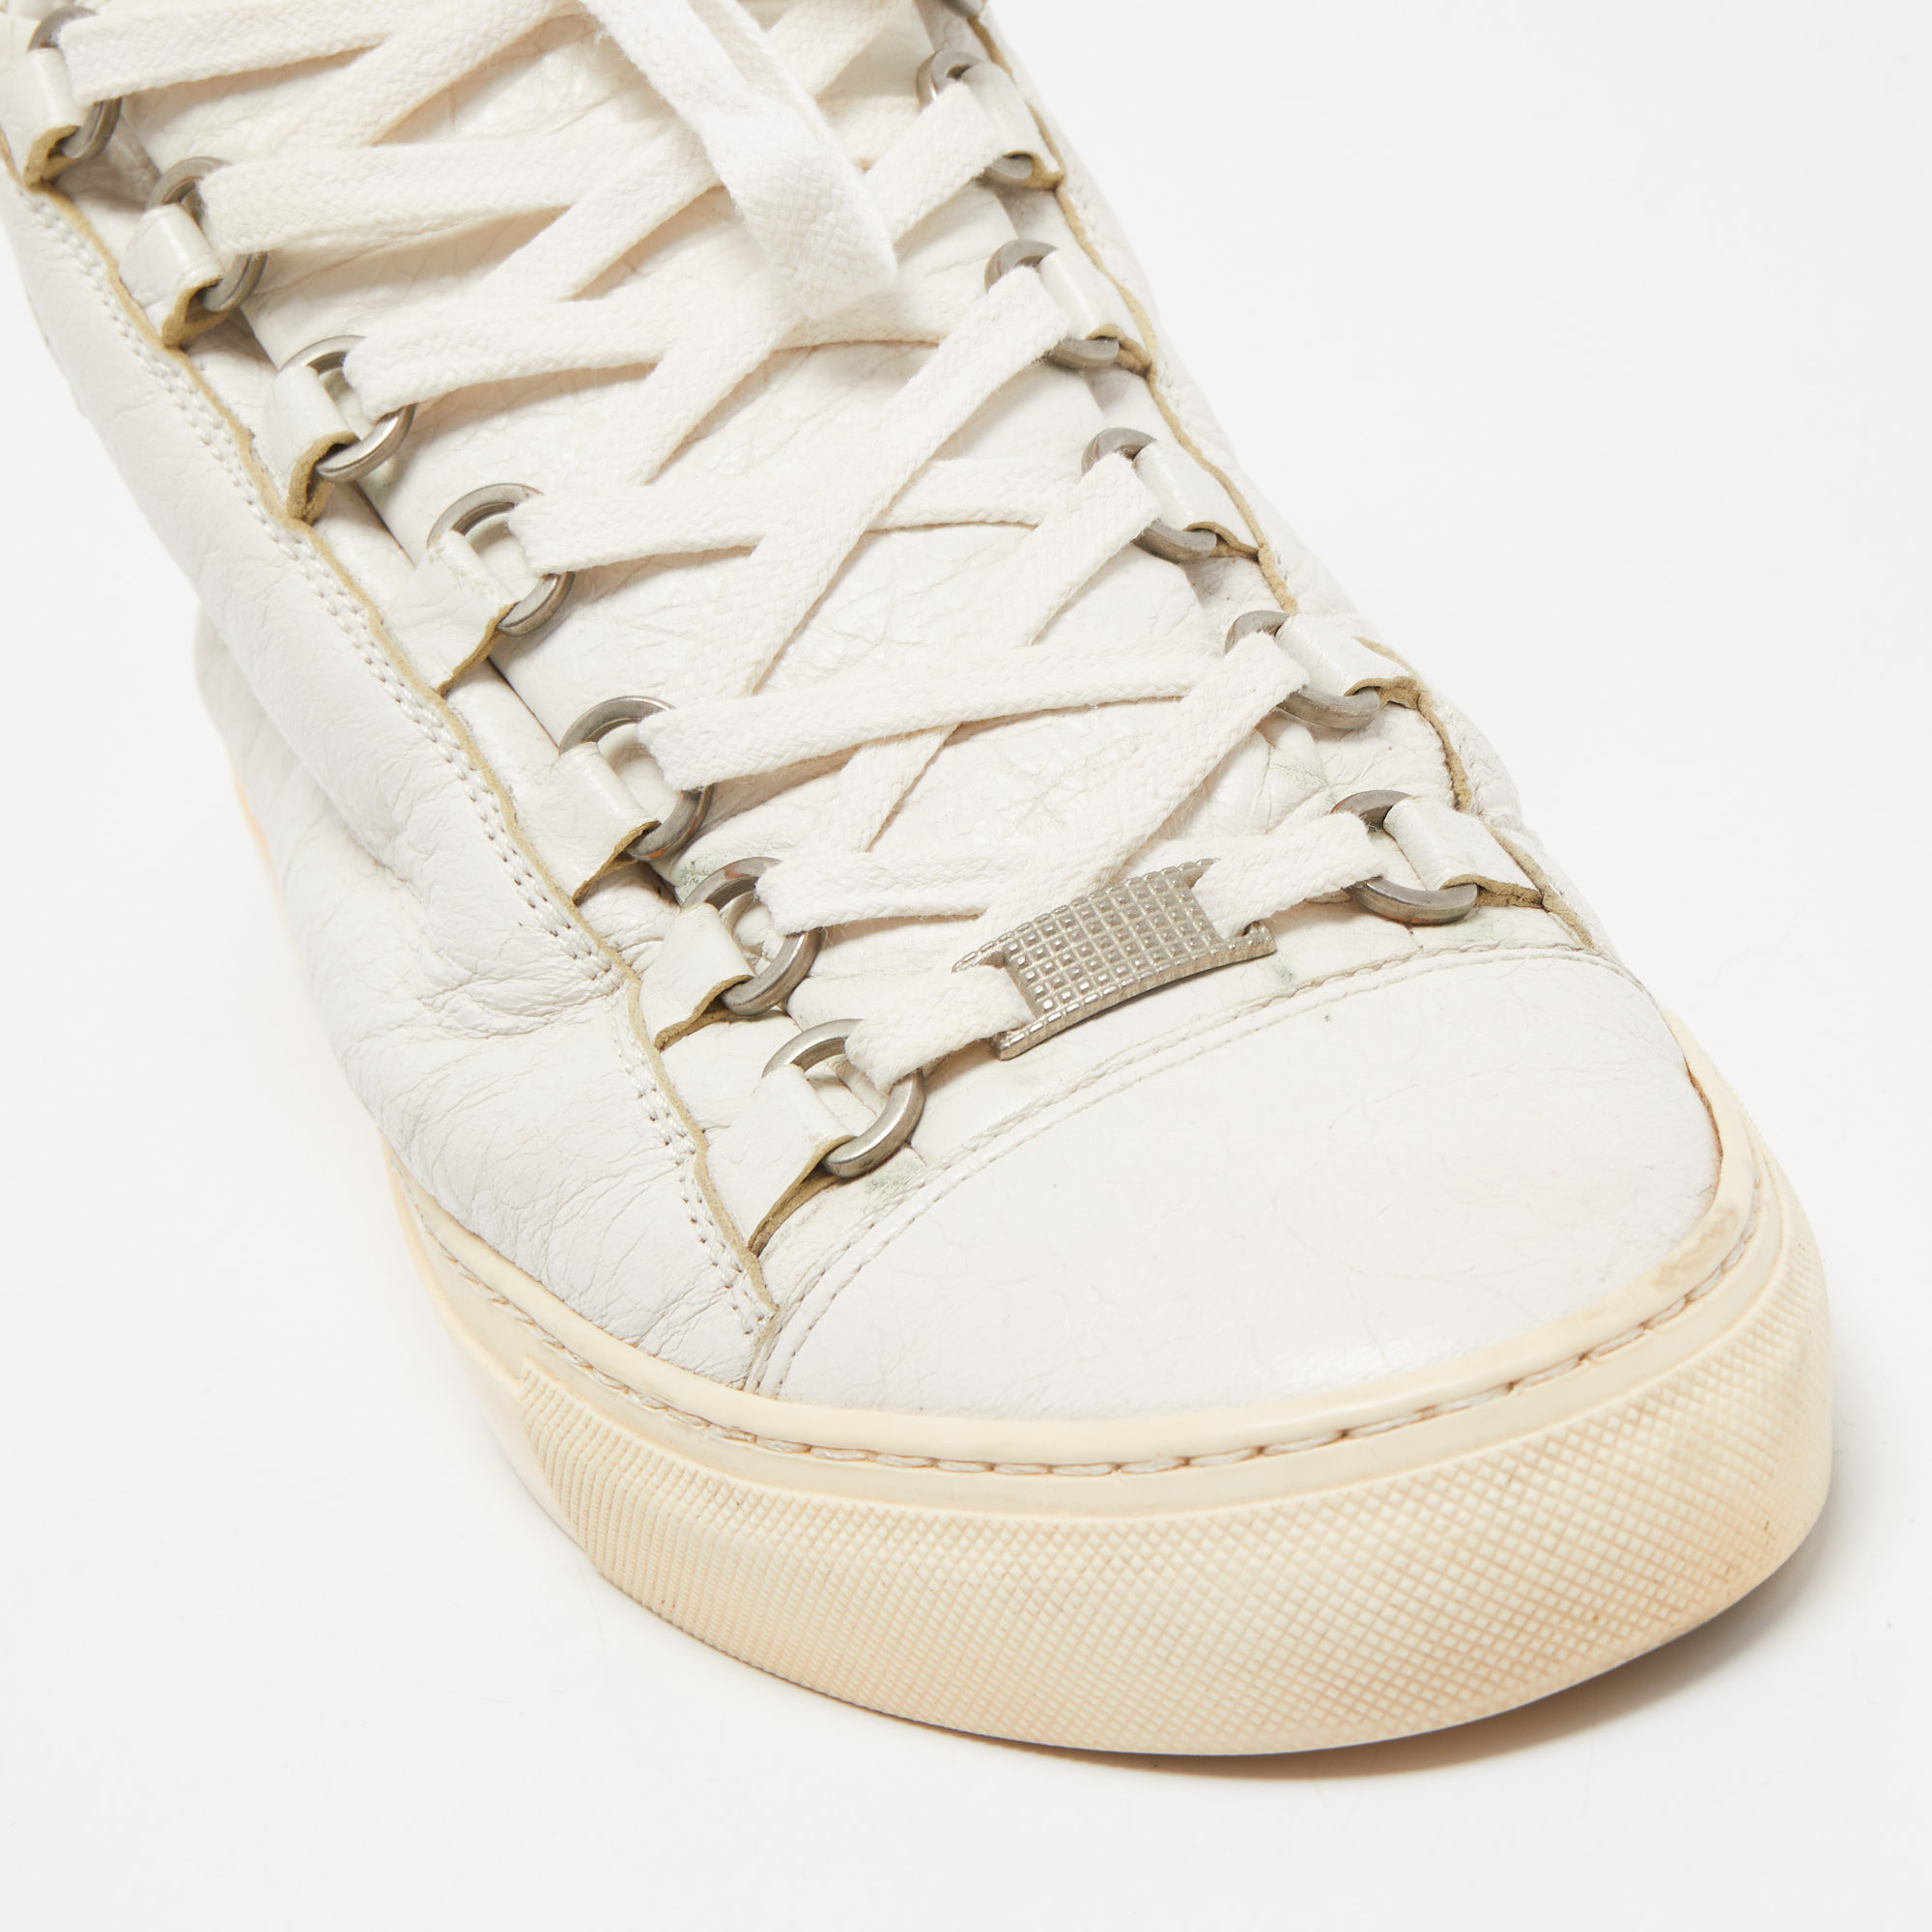 Balenciaga White Leather Arena High Top Sneakers Size 40